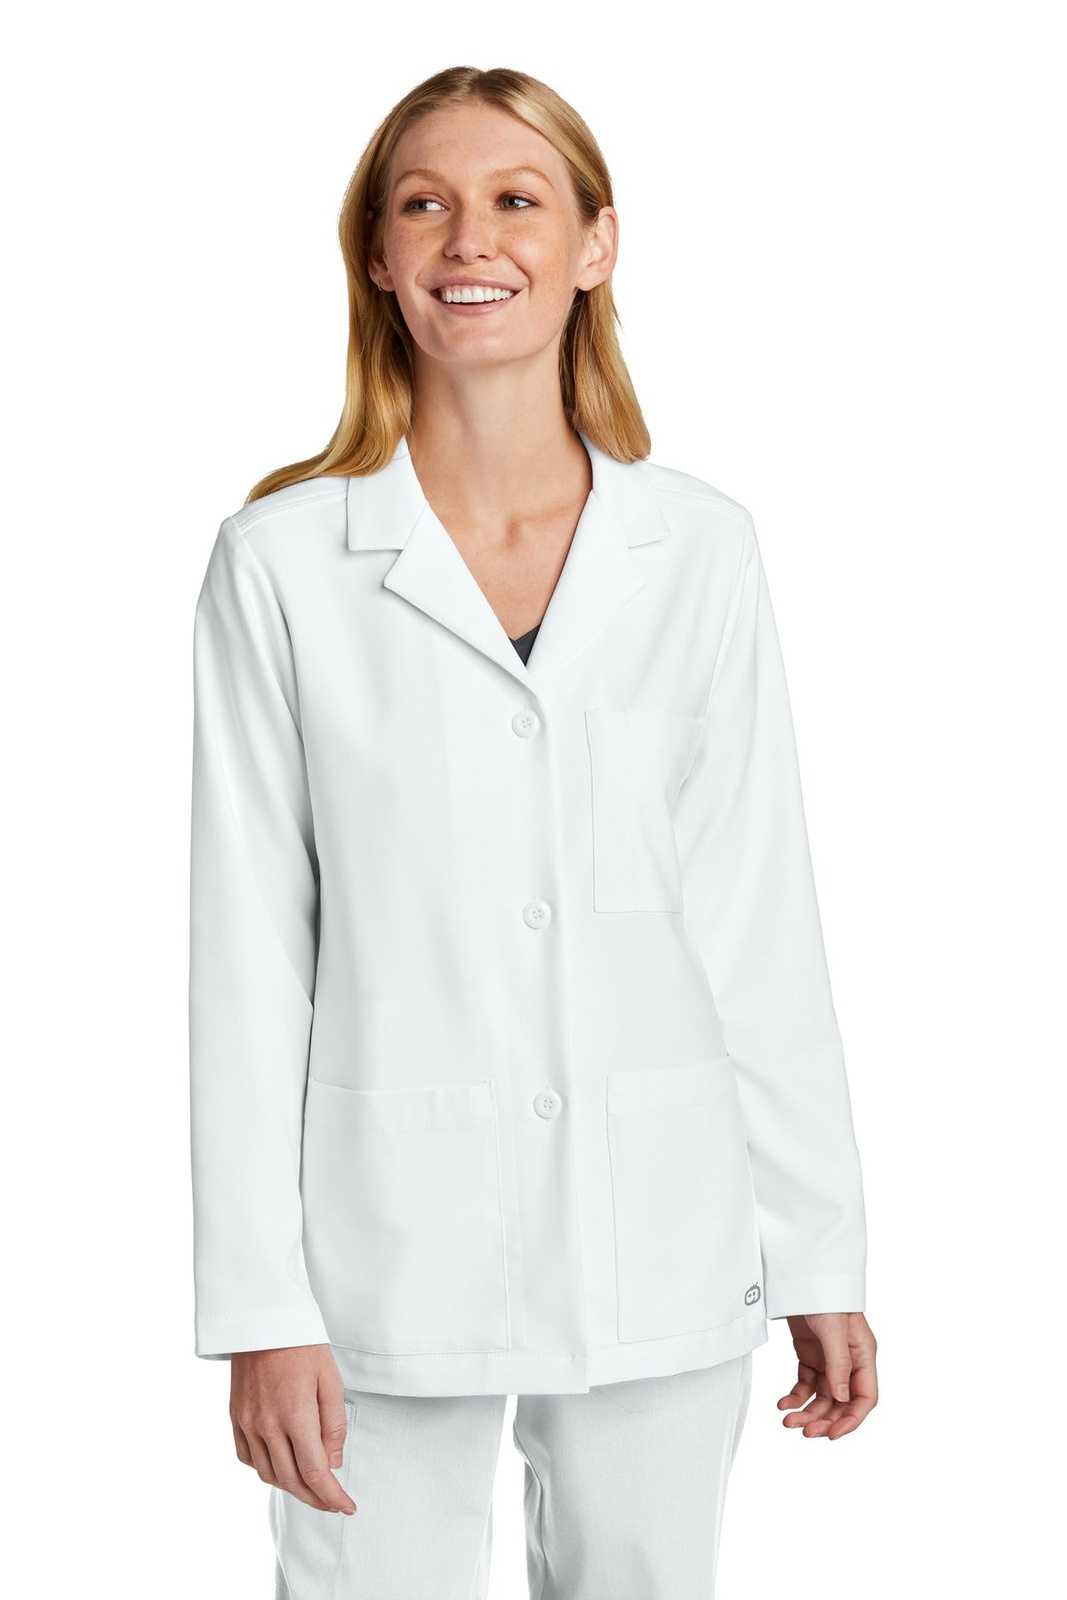 Wonderwink WW4072 Women's Consultation Lab Coat - White - HIT a Double - 1